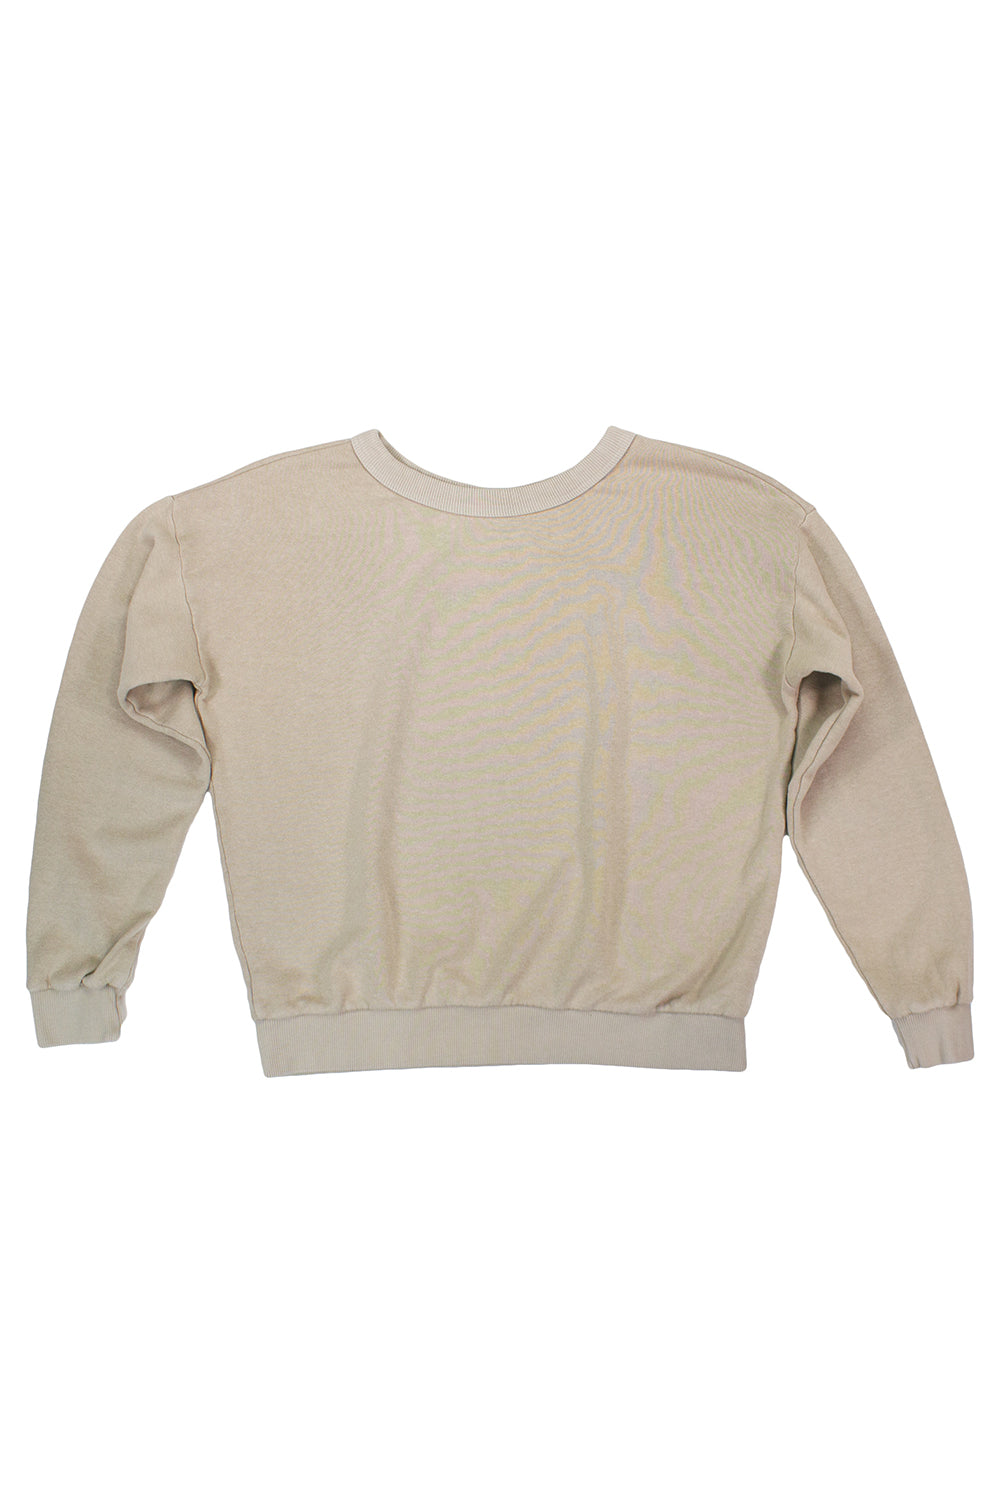 Crux Cropped Sweatshirt | Jungmaven Hemp Clothing & Accessories / Color: Canvas